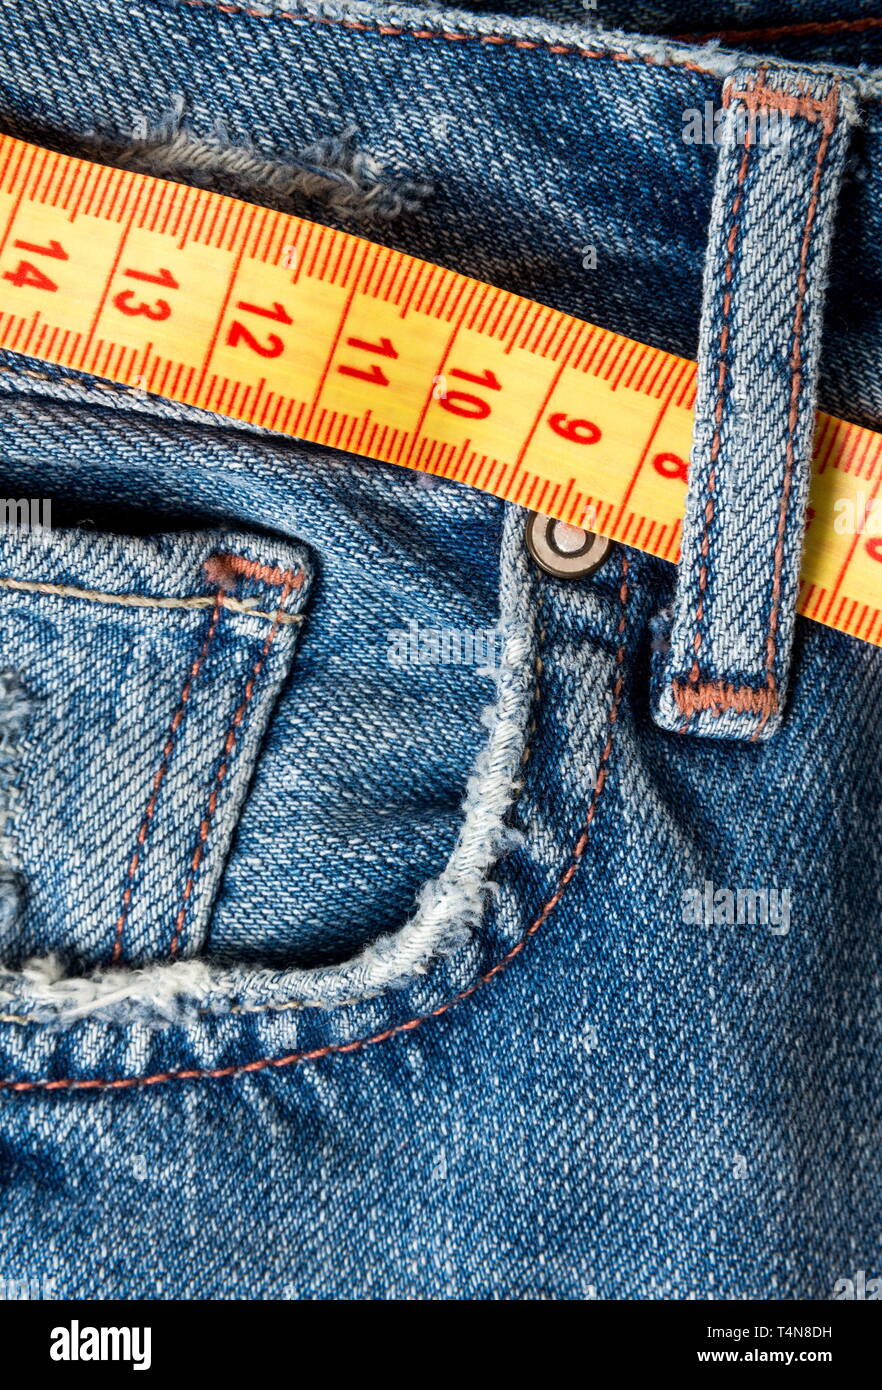 https://c8.alamy.com/comp/T4N8DH/meter-closeup-on-the-jeans-T4N8DH.jpg